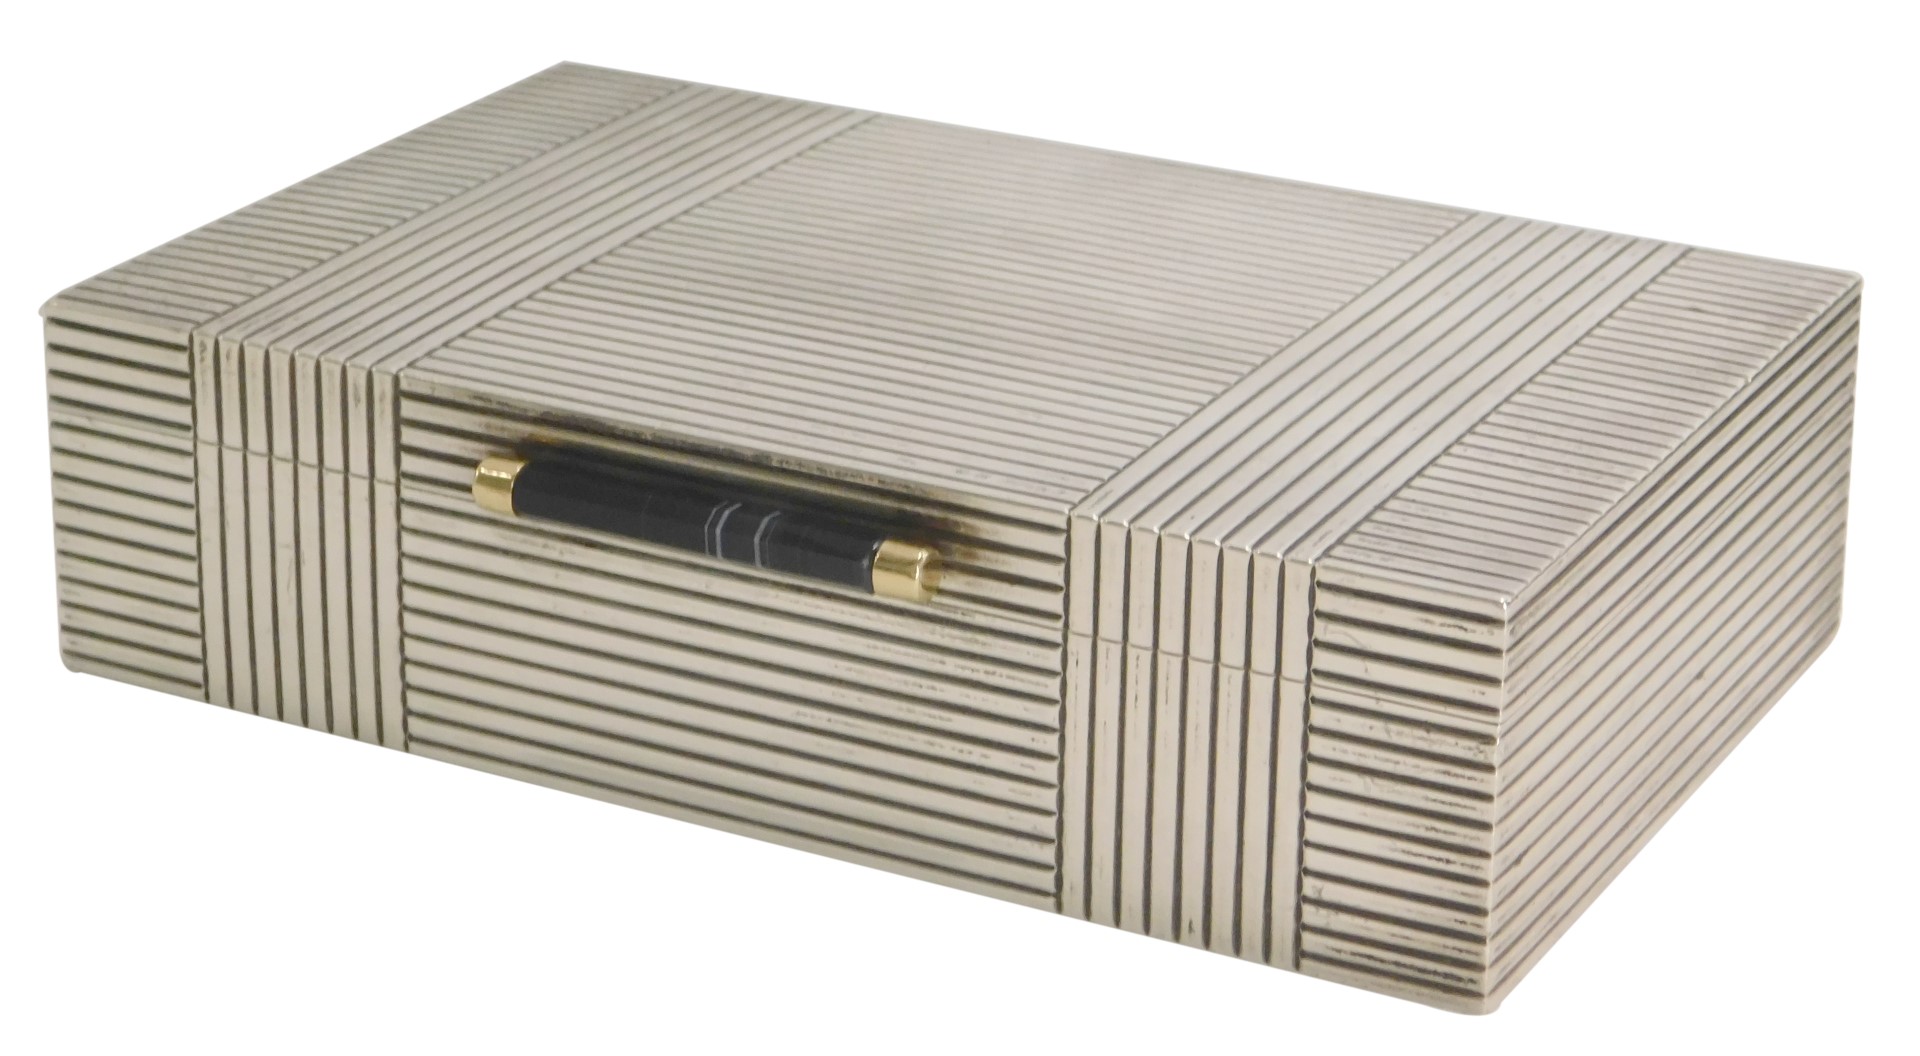 A George V silver presentation cigarette box, of striped outer design with a black onyx barrel handl